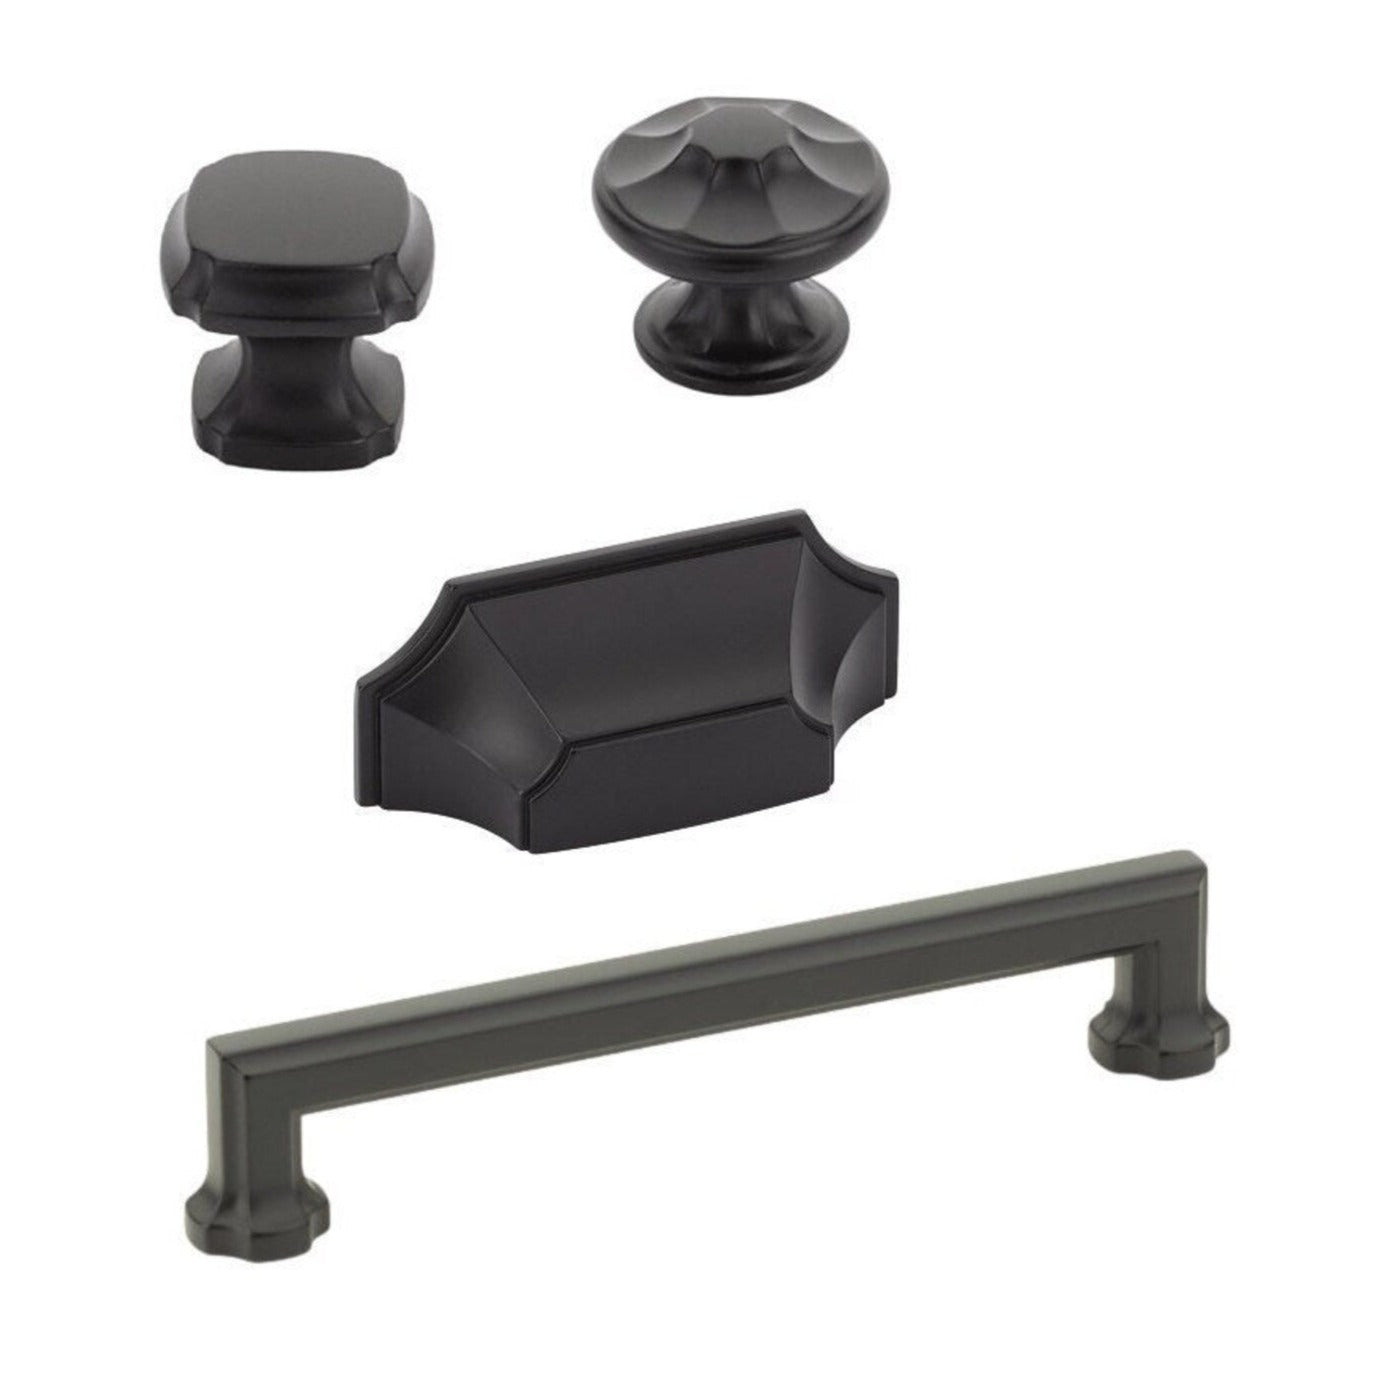 Matte Black "Regal" Cabinet Knobs and Drawer Pulls - Industry Hardware